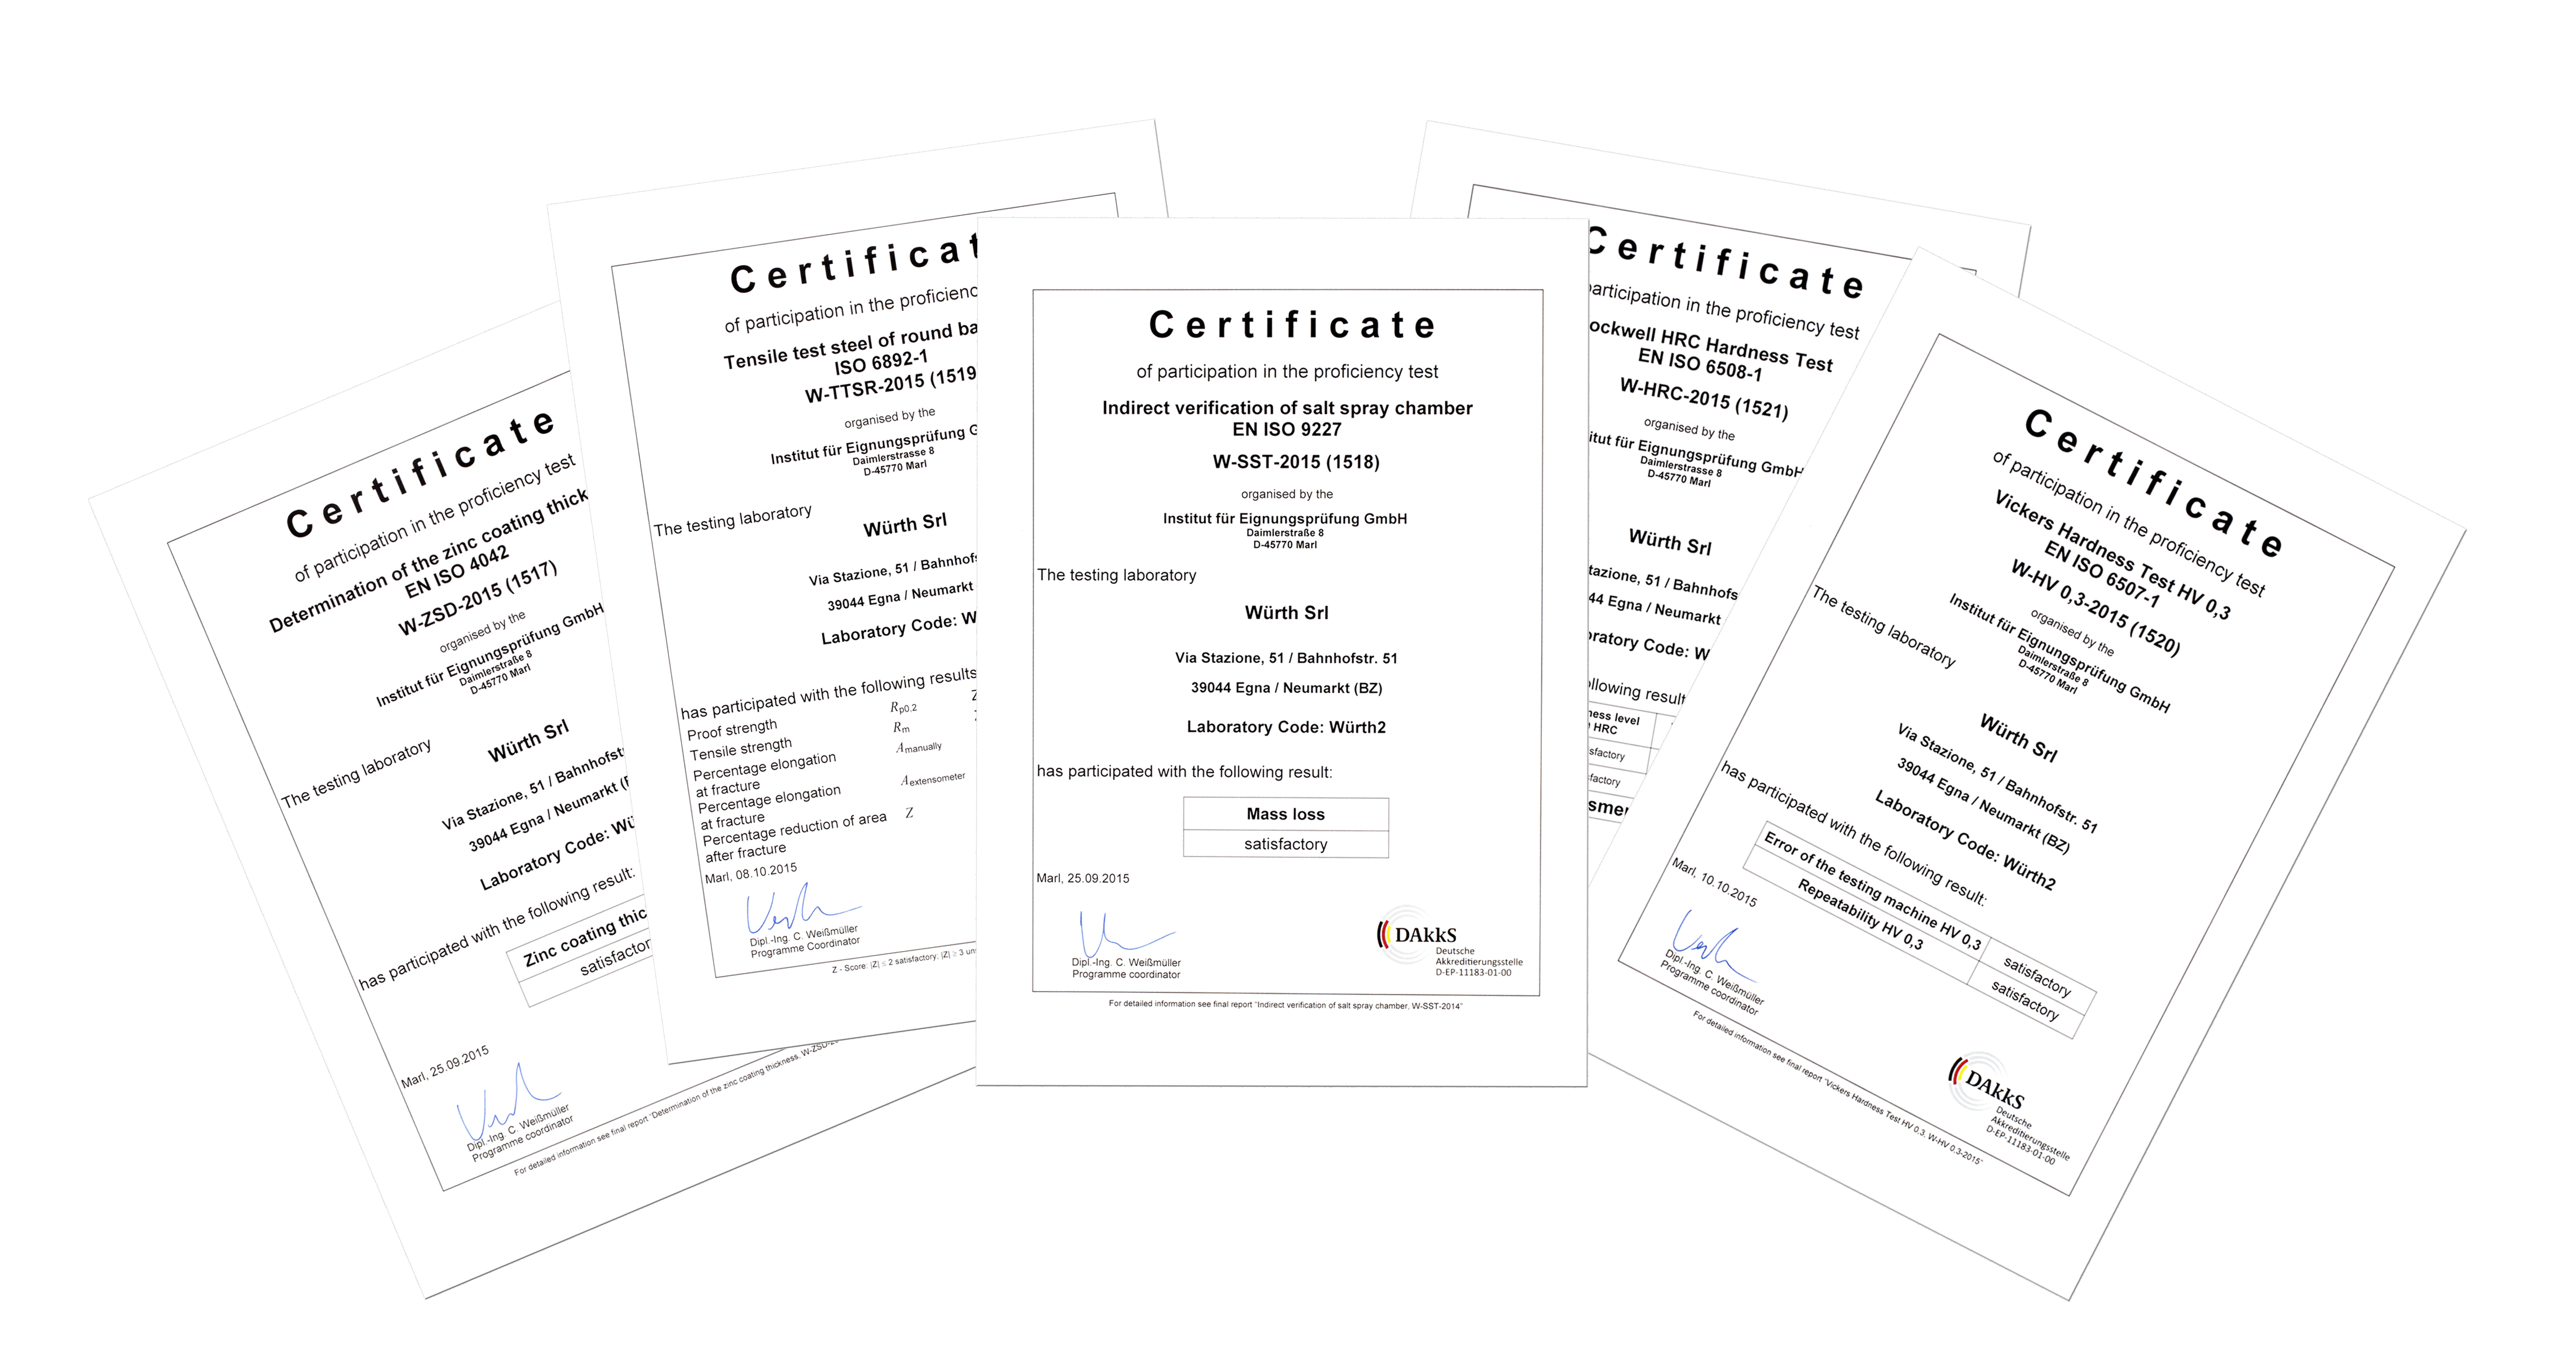 Certificati_multipli wurth